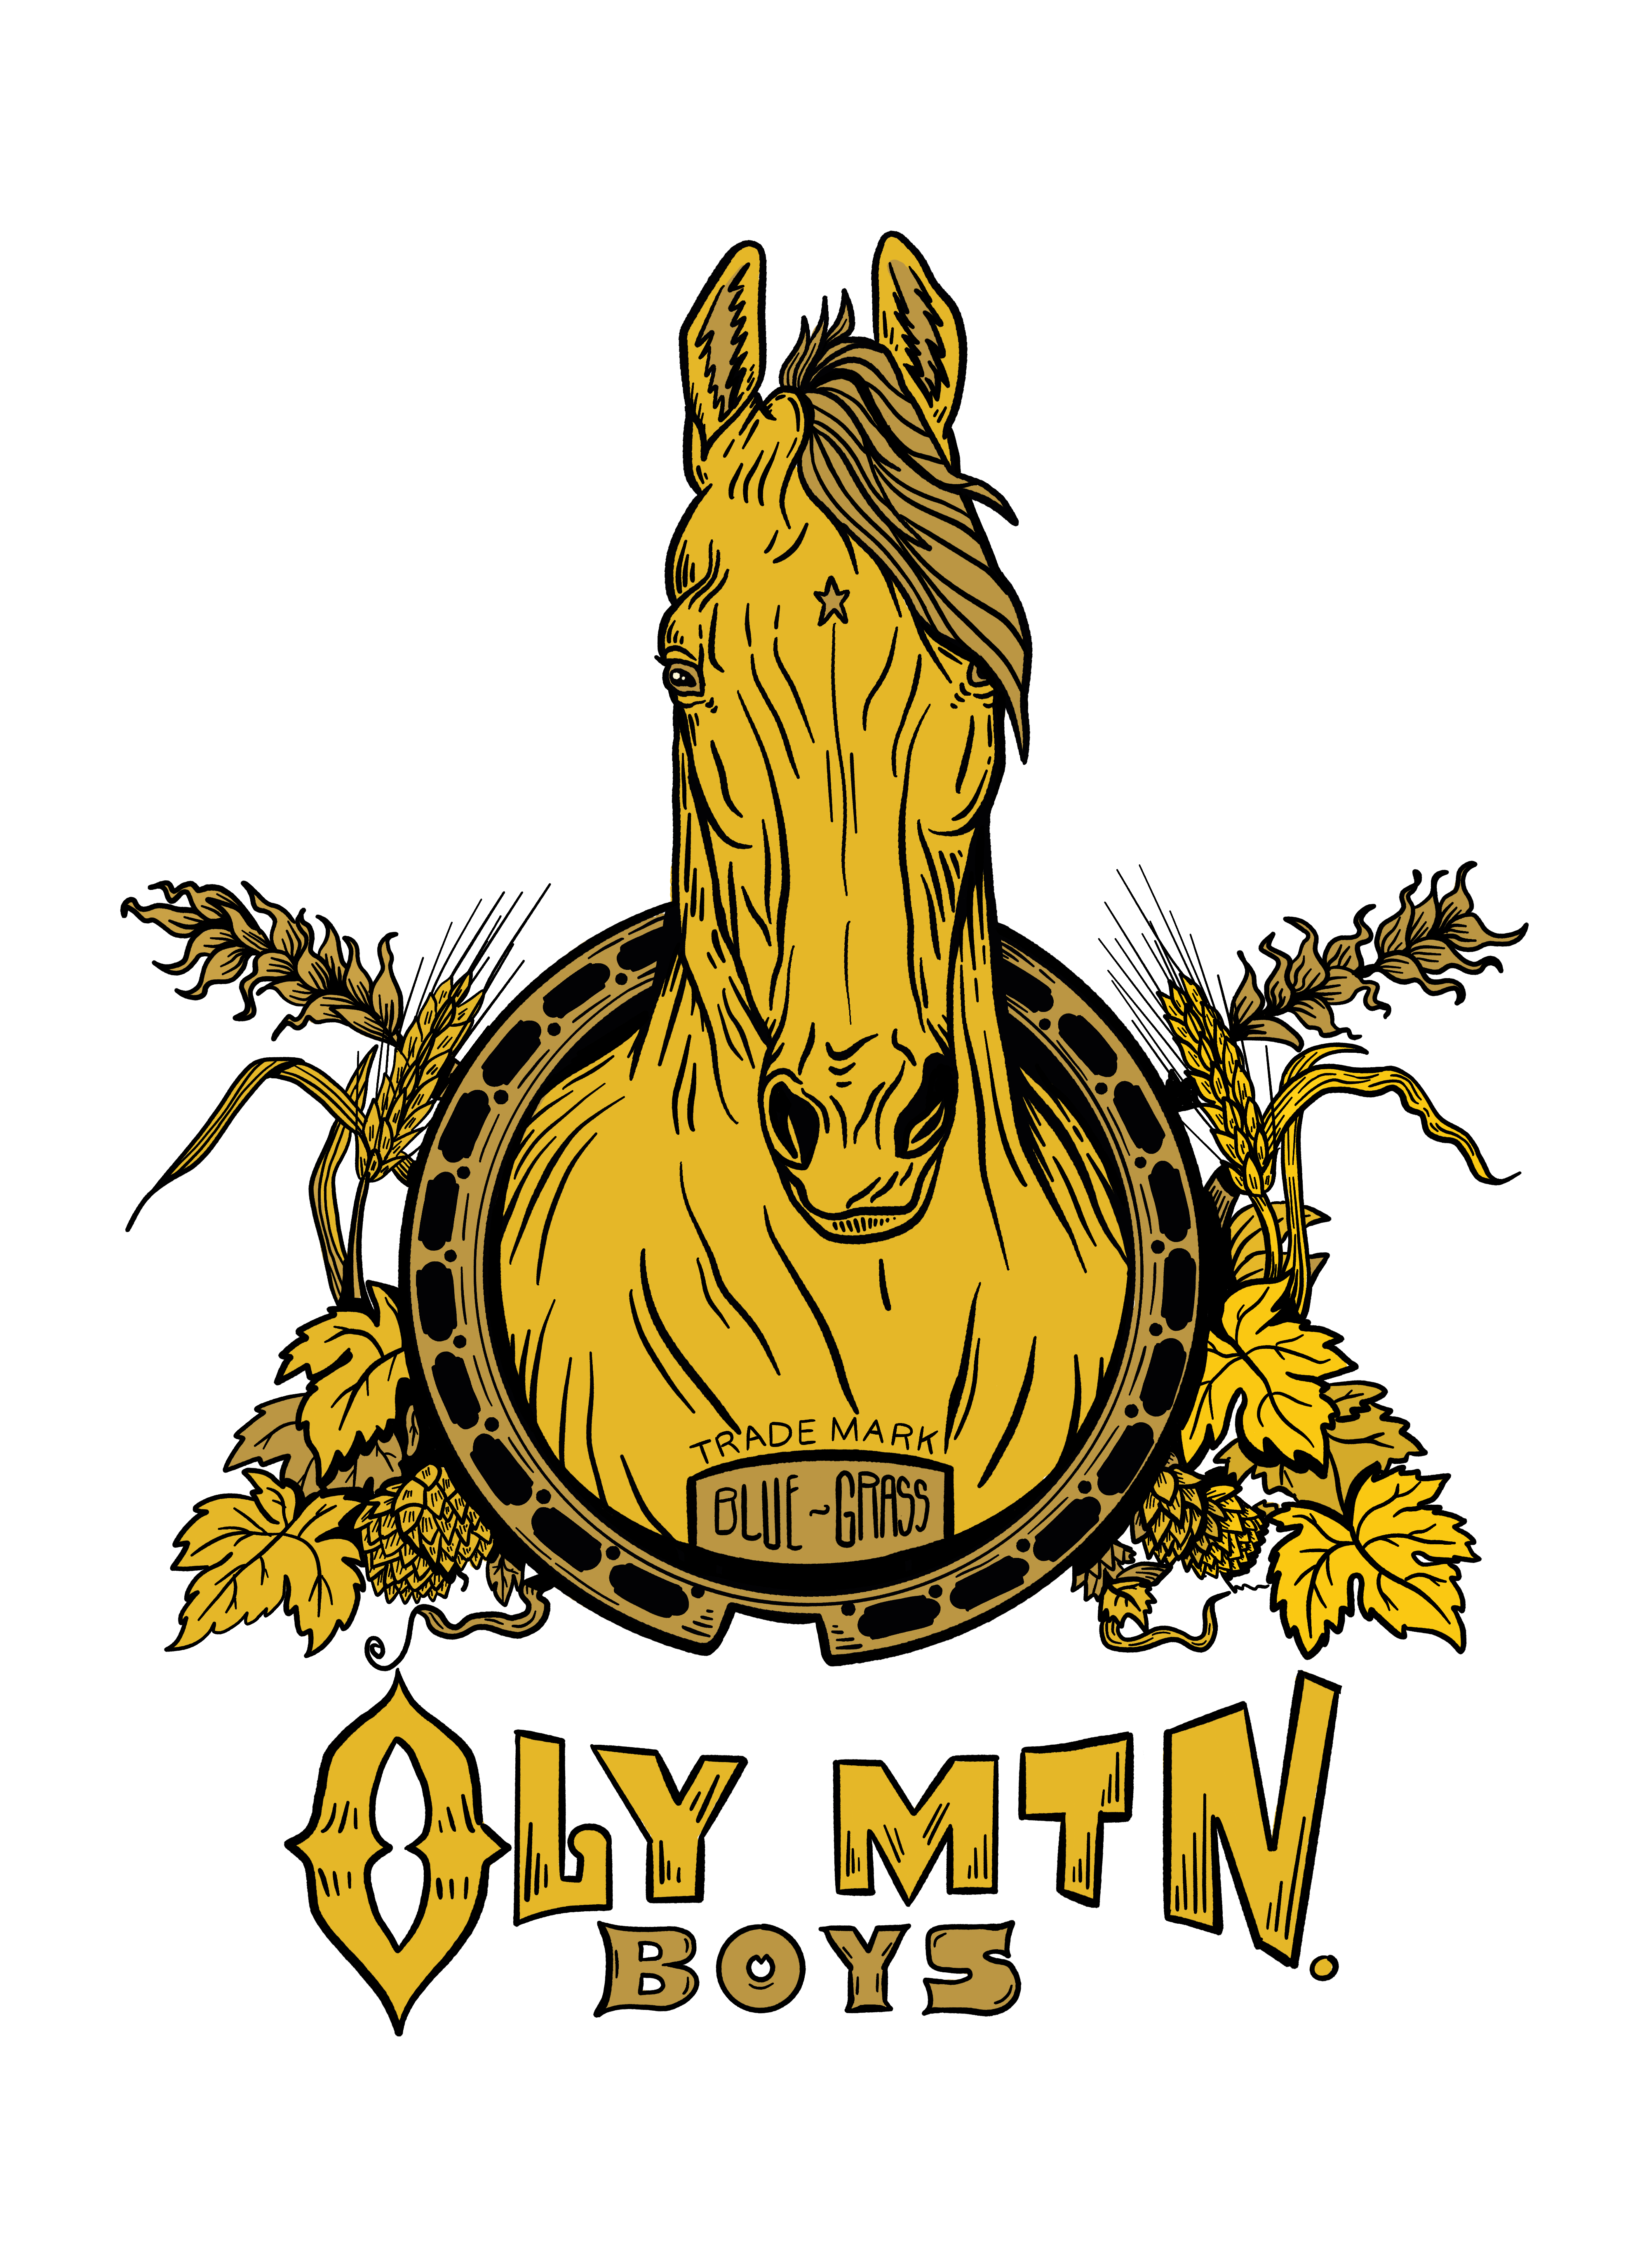 The Oly Mountain Boys